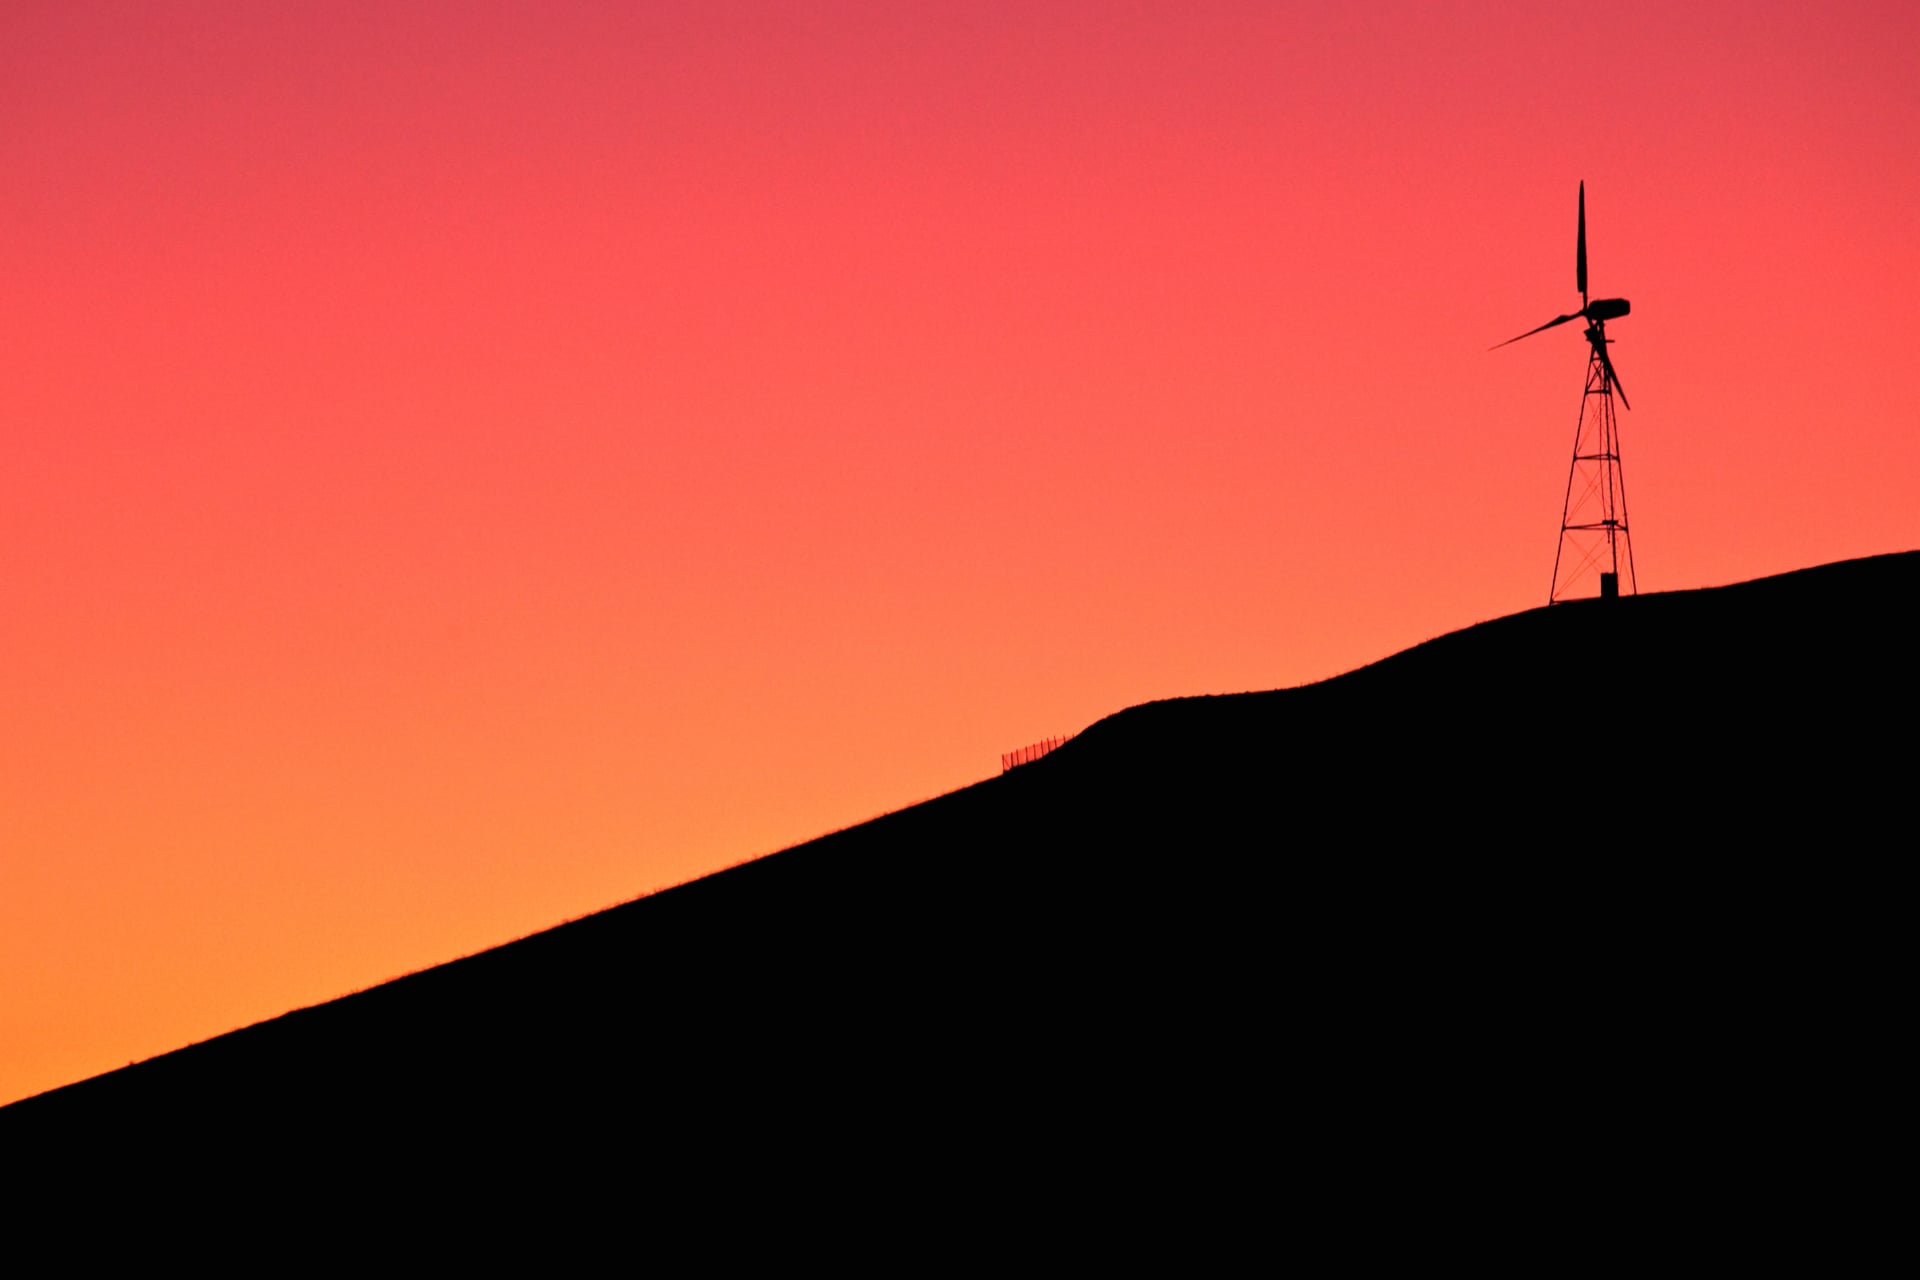 Digital Art Windmill at 750 x 1334 iPhone 6 size wallpapers HD quality